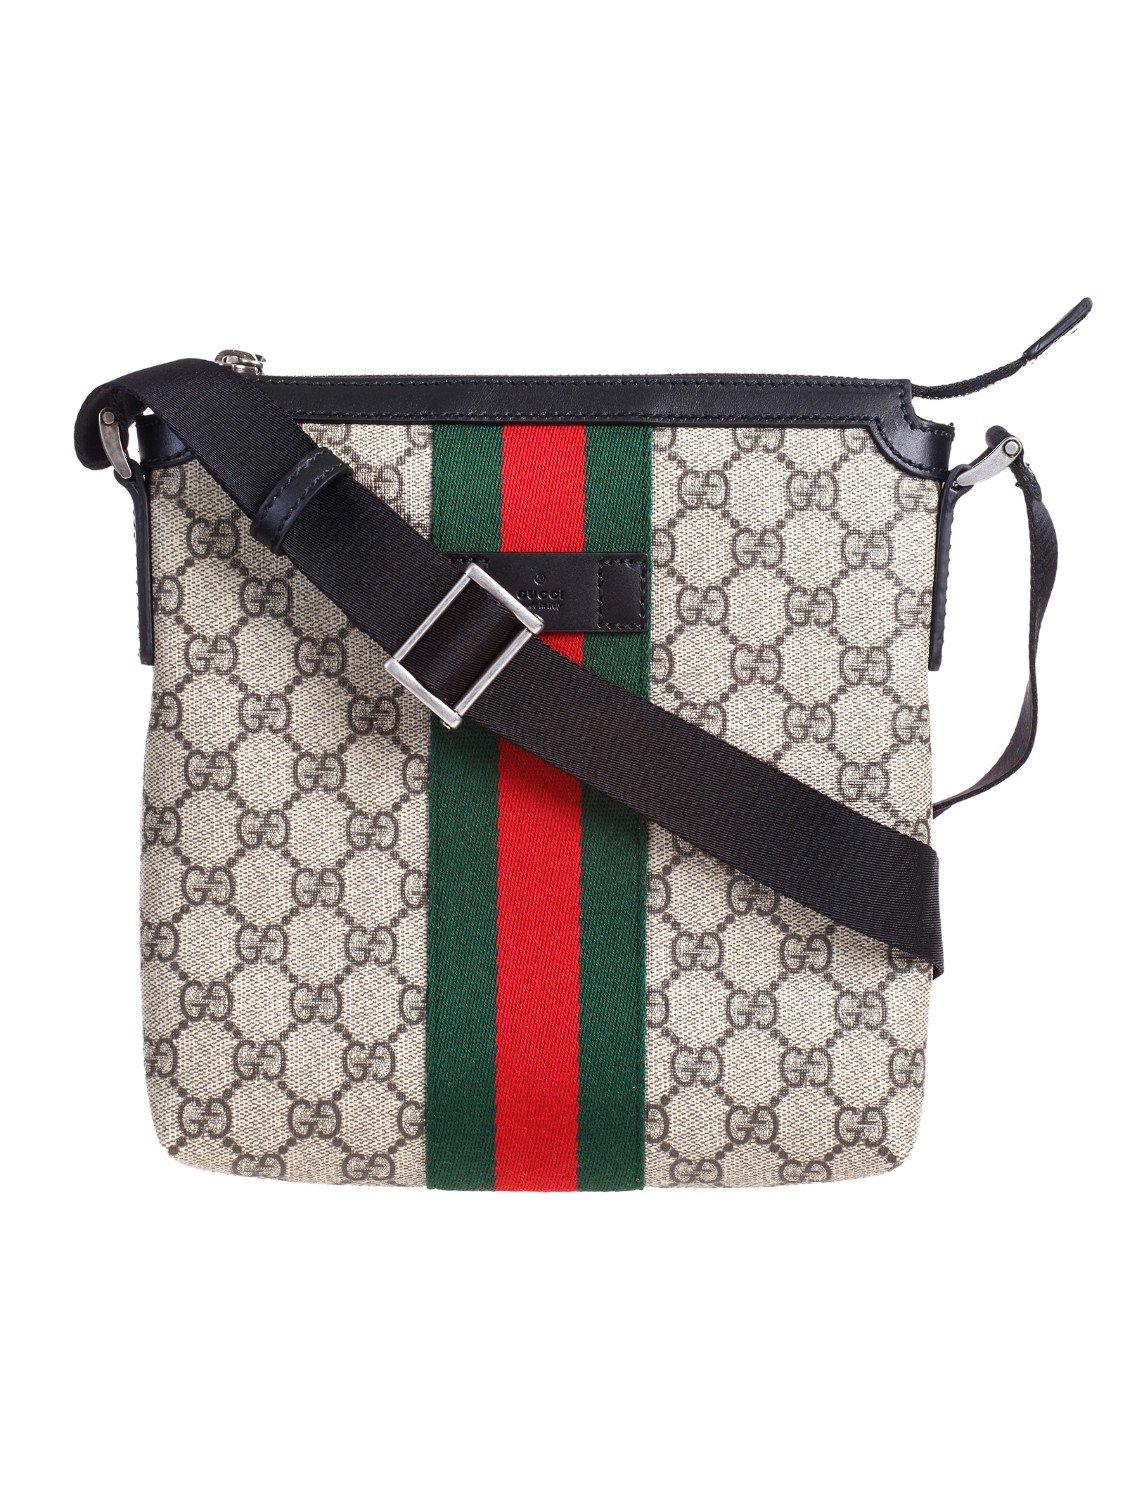 Gucci Shoulder Bag In GG Supreme Fabric in Natural for Men - Lyst